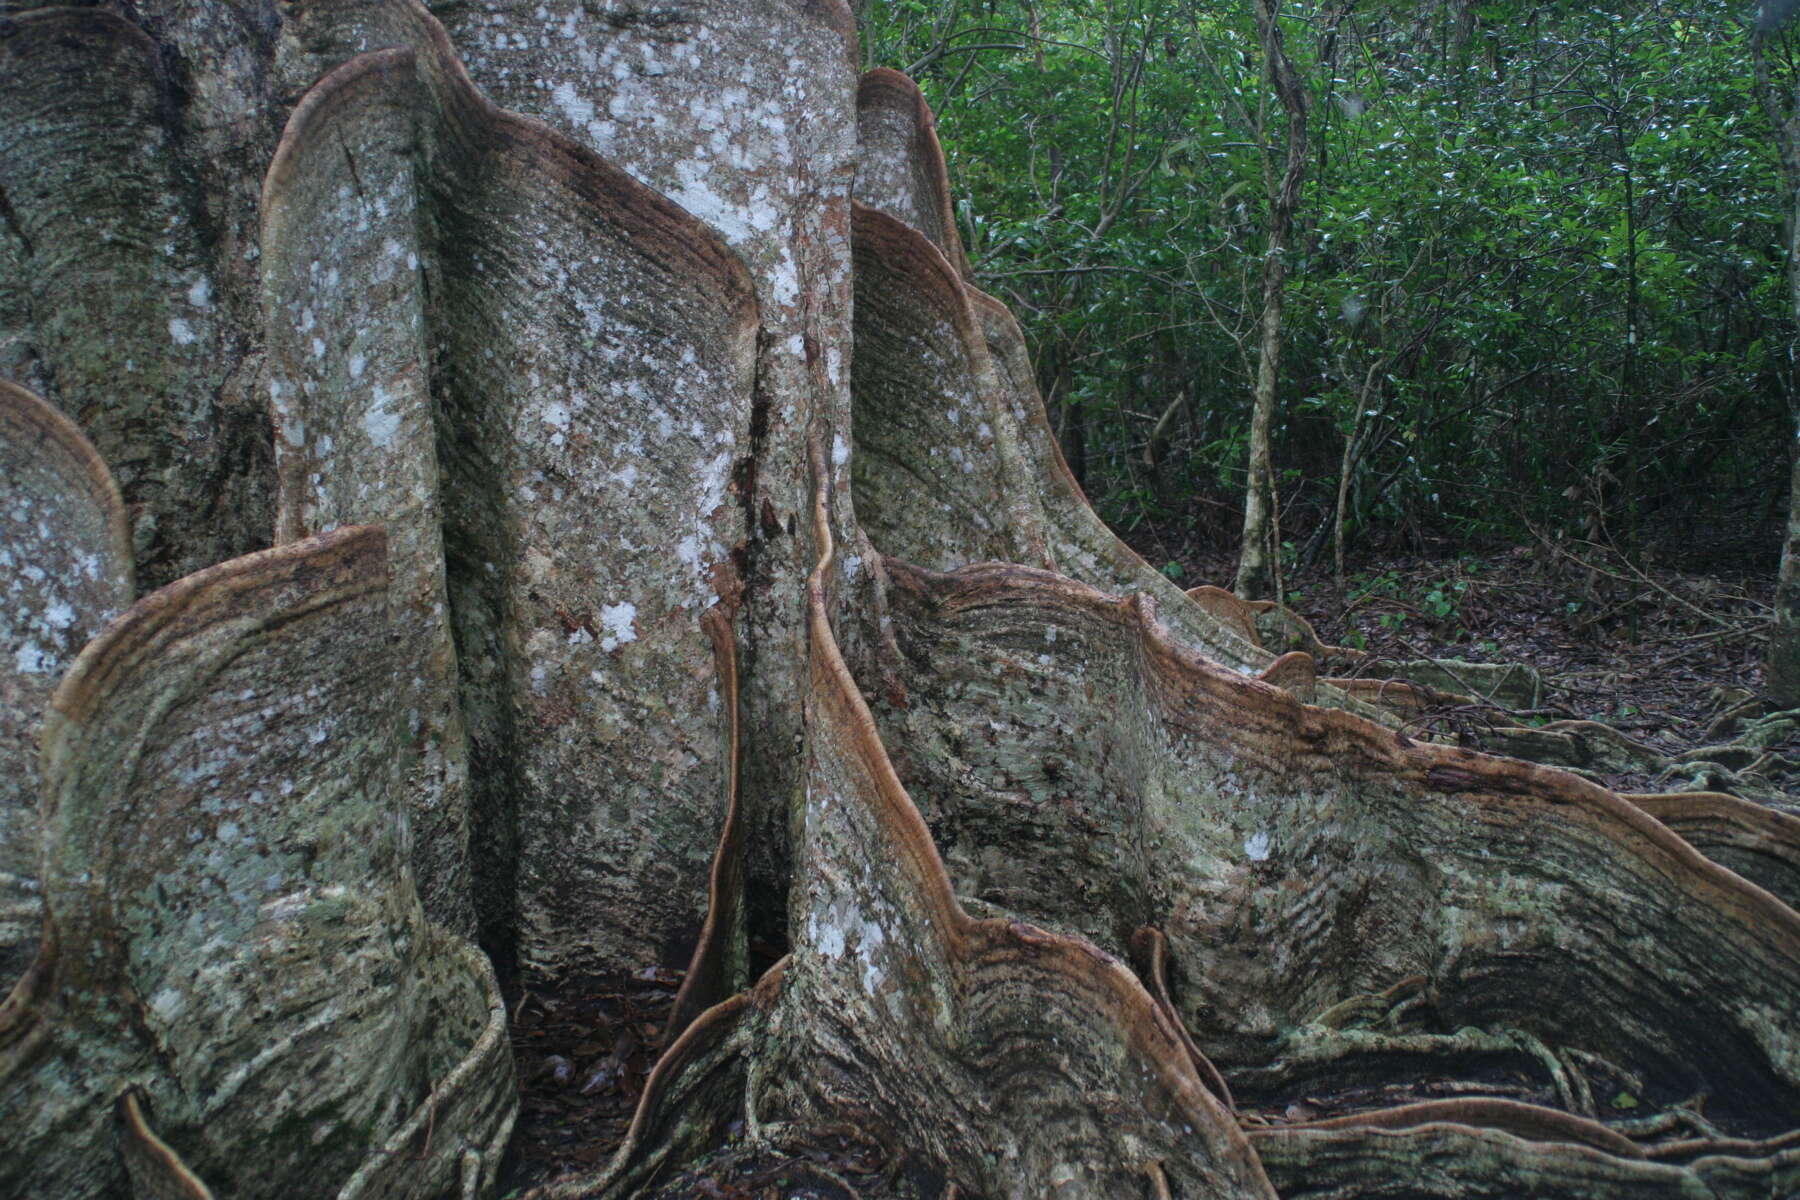 Image of Sundari tree